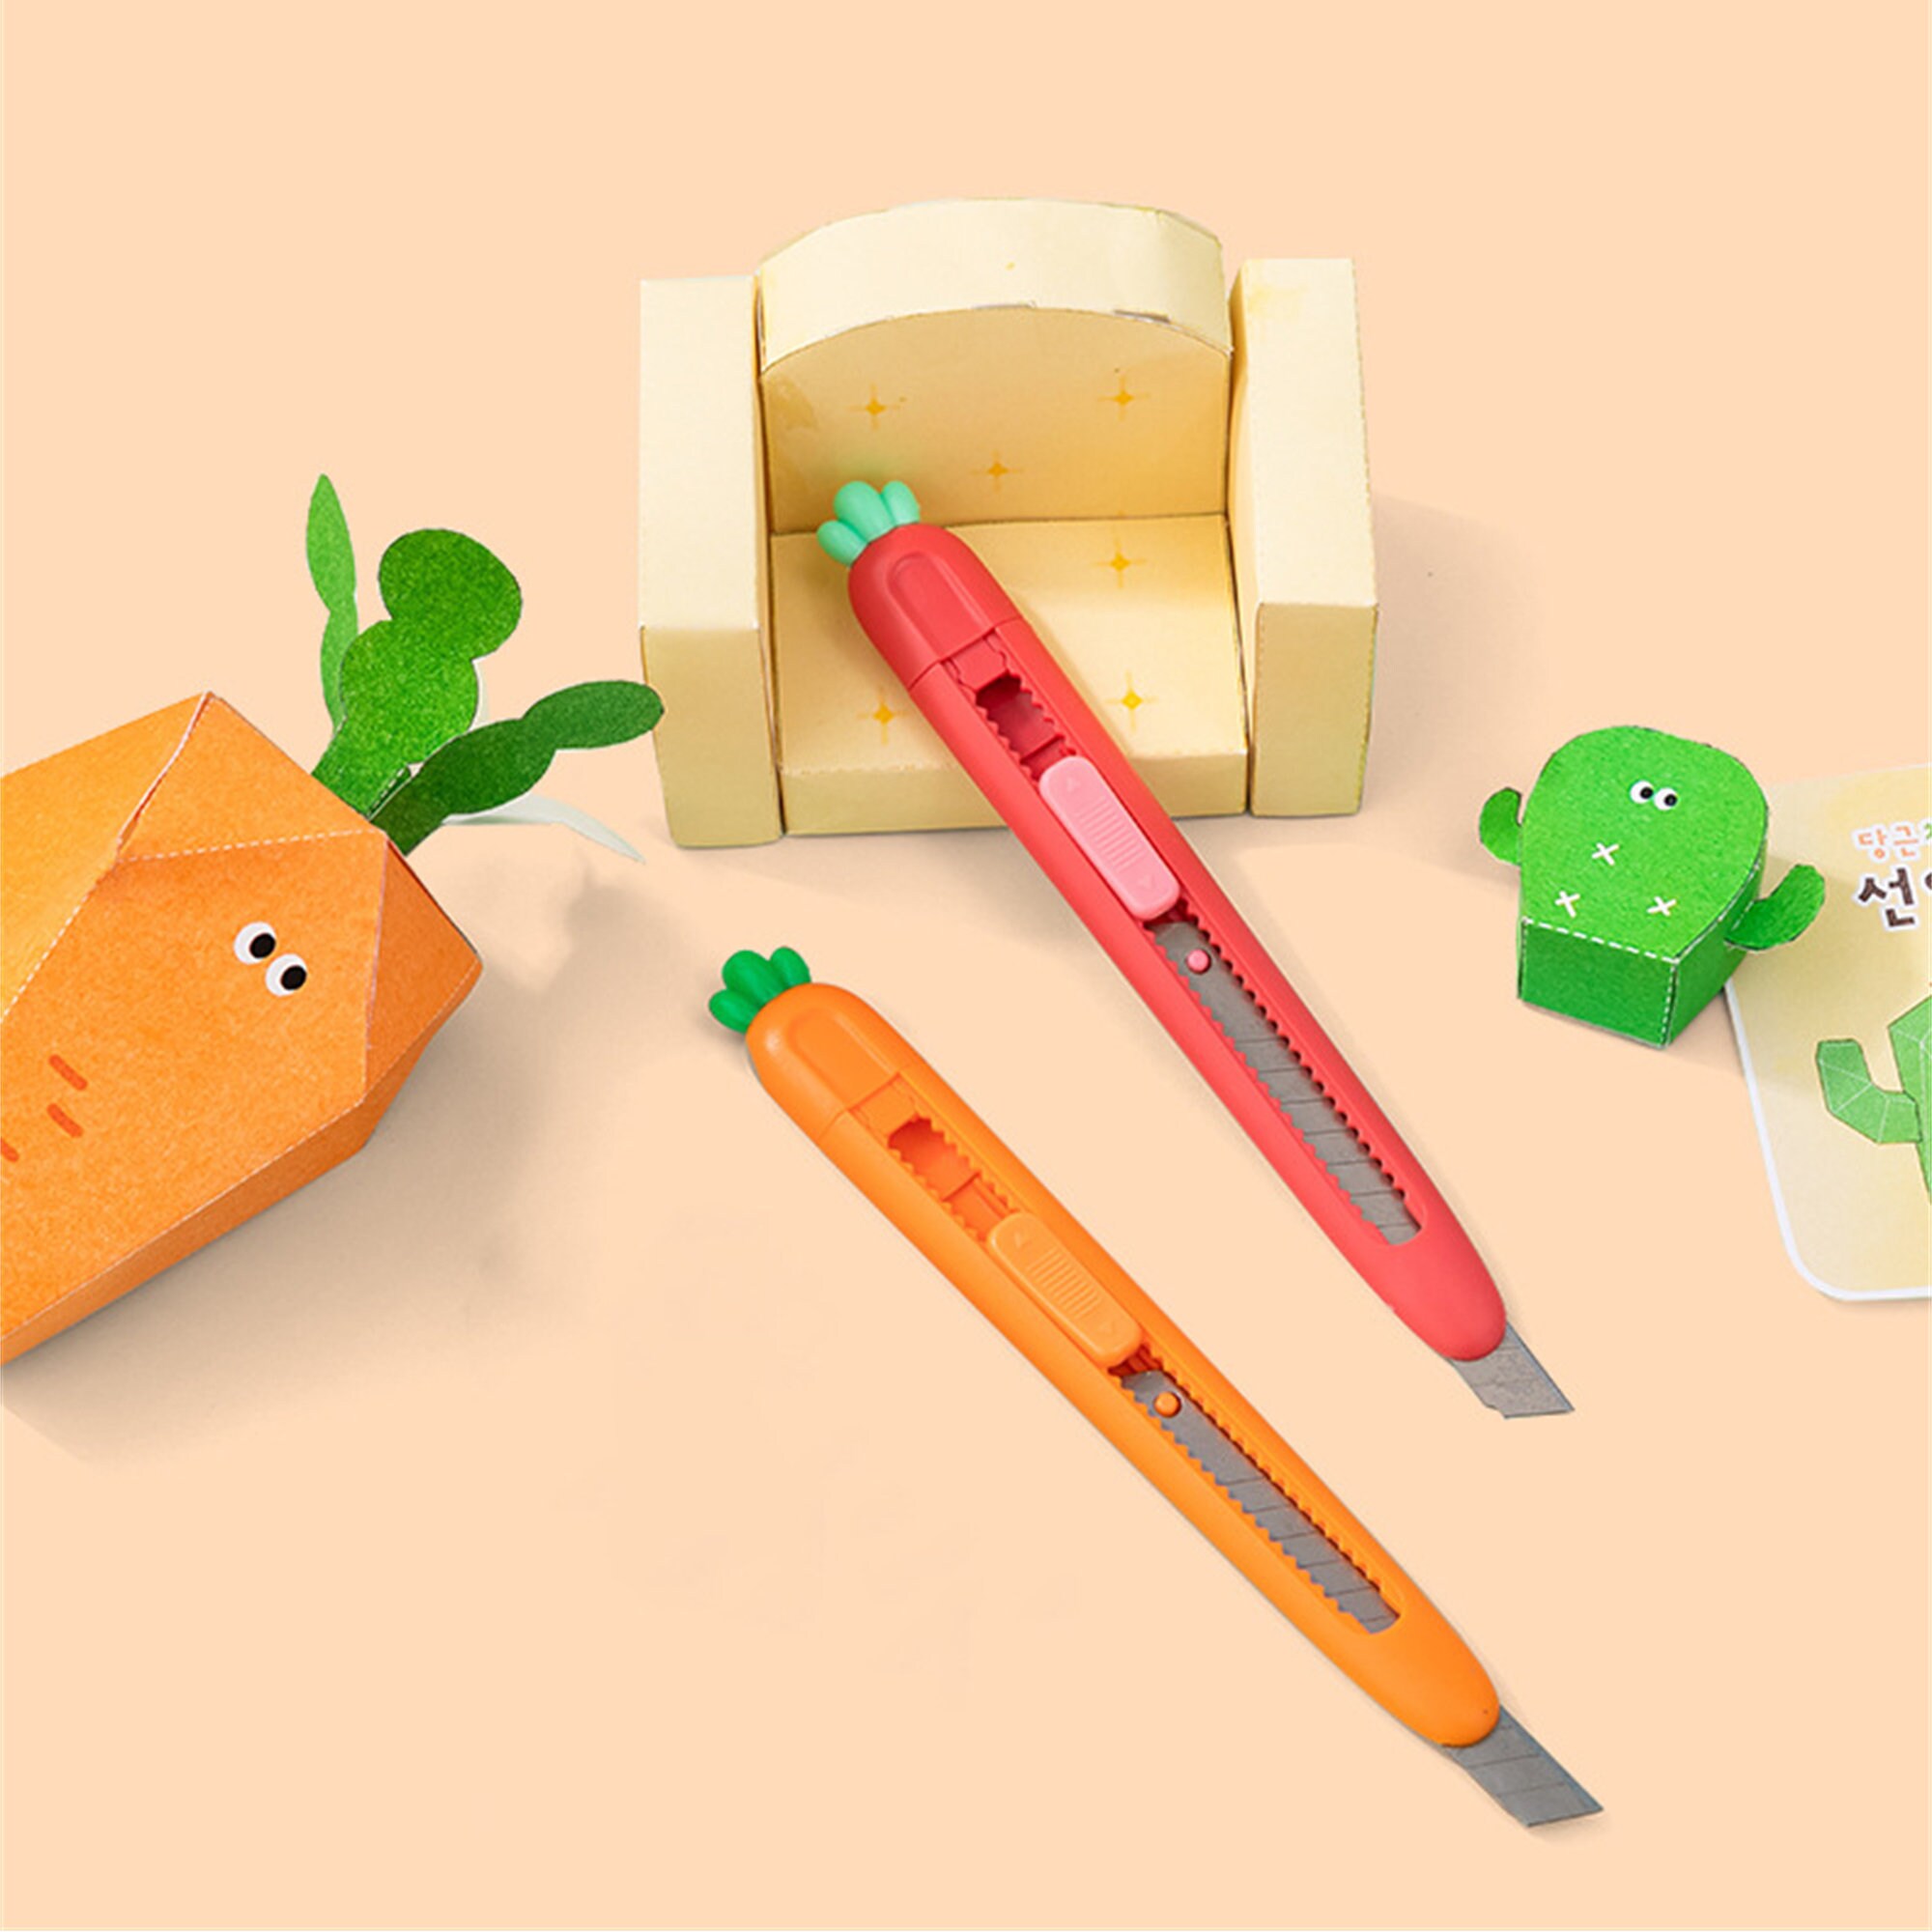 Craft Cutter / Utility Knife / Carving Knife / Pen Cutter / Cutting To, MiniatureSweet, Kawaii Resin Crafts, Decoden Cabochons Supplies